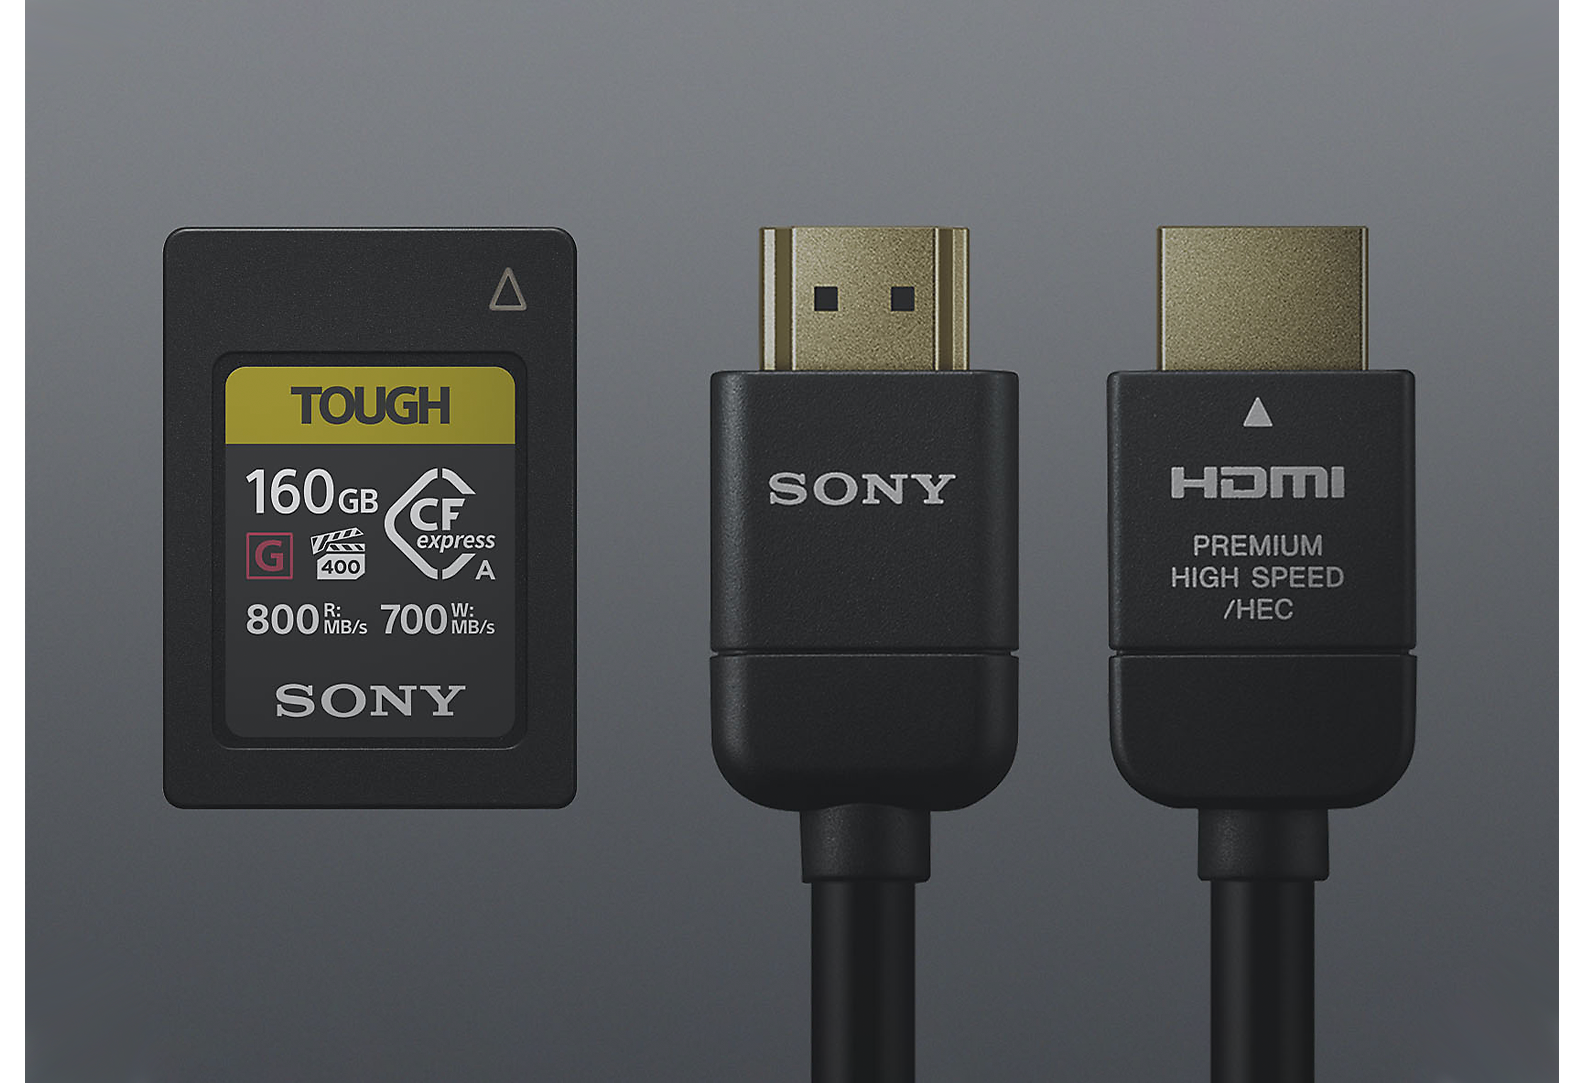 Tough SD-картичка од Sony и два црни кабли од Sony наспроти сива заднина